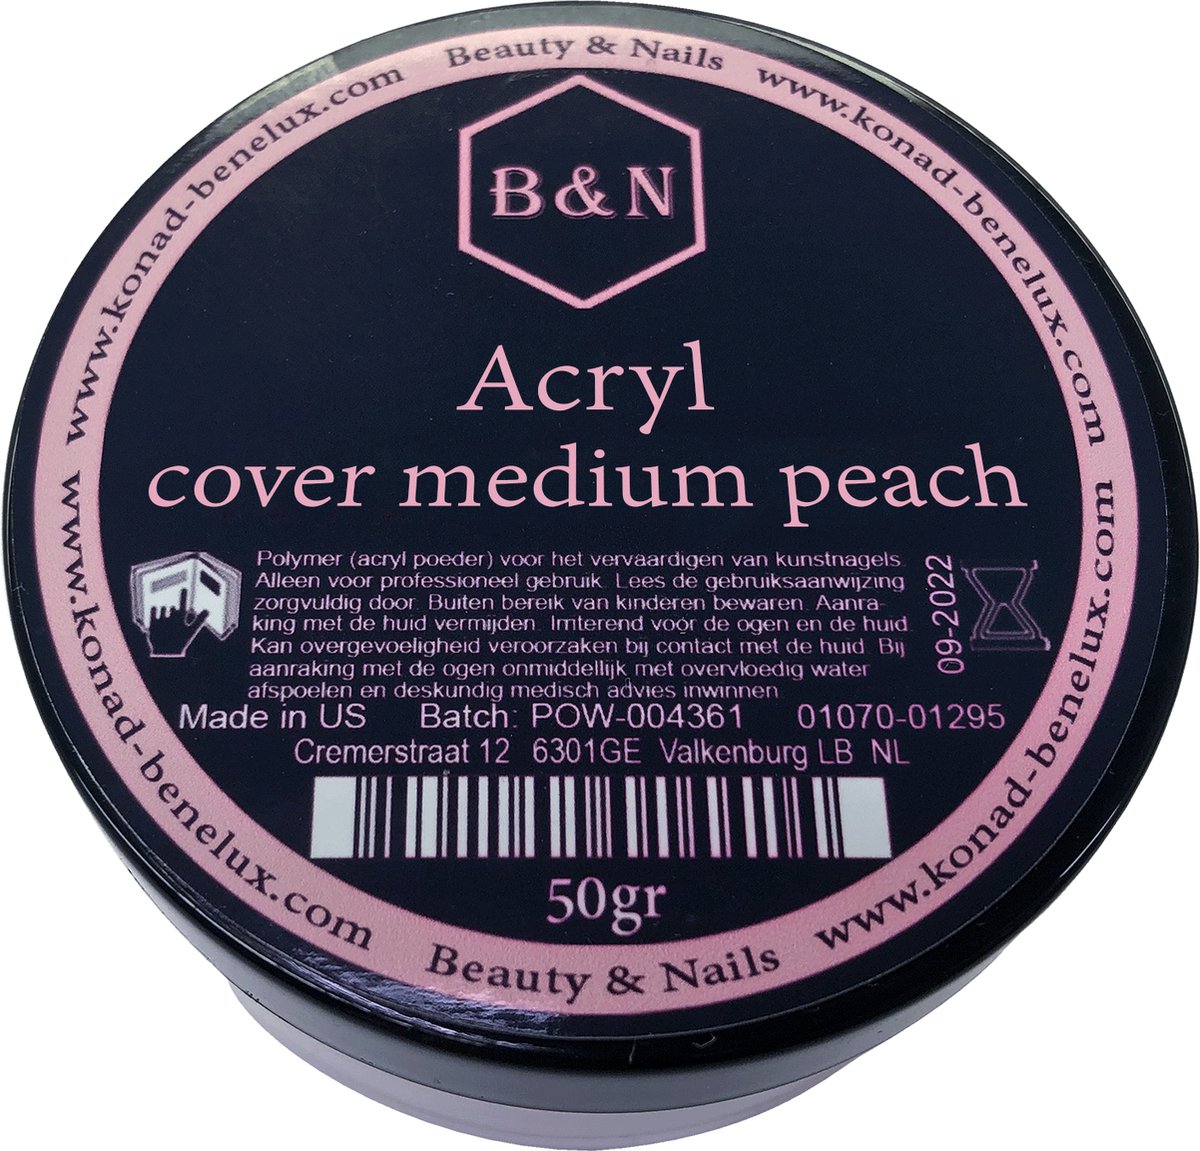 Acryl - cover medium peach - 50 gr | B&N - acrylpoeder - VEGAN - acrylpoeder